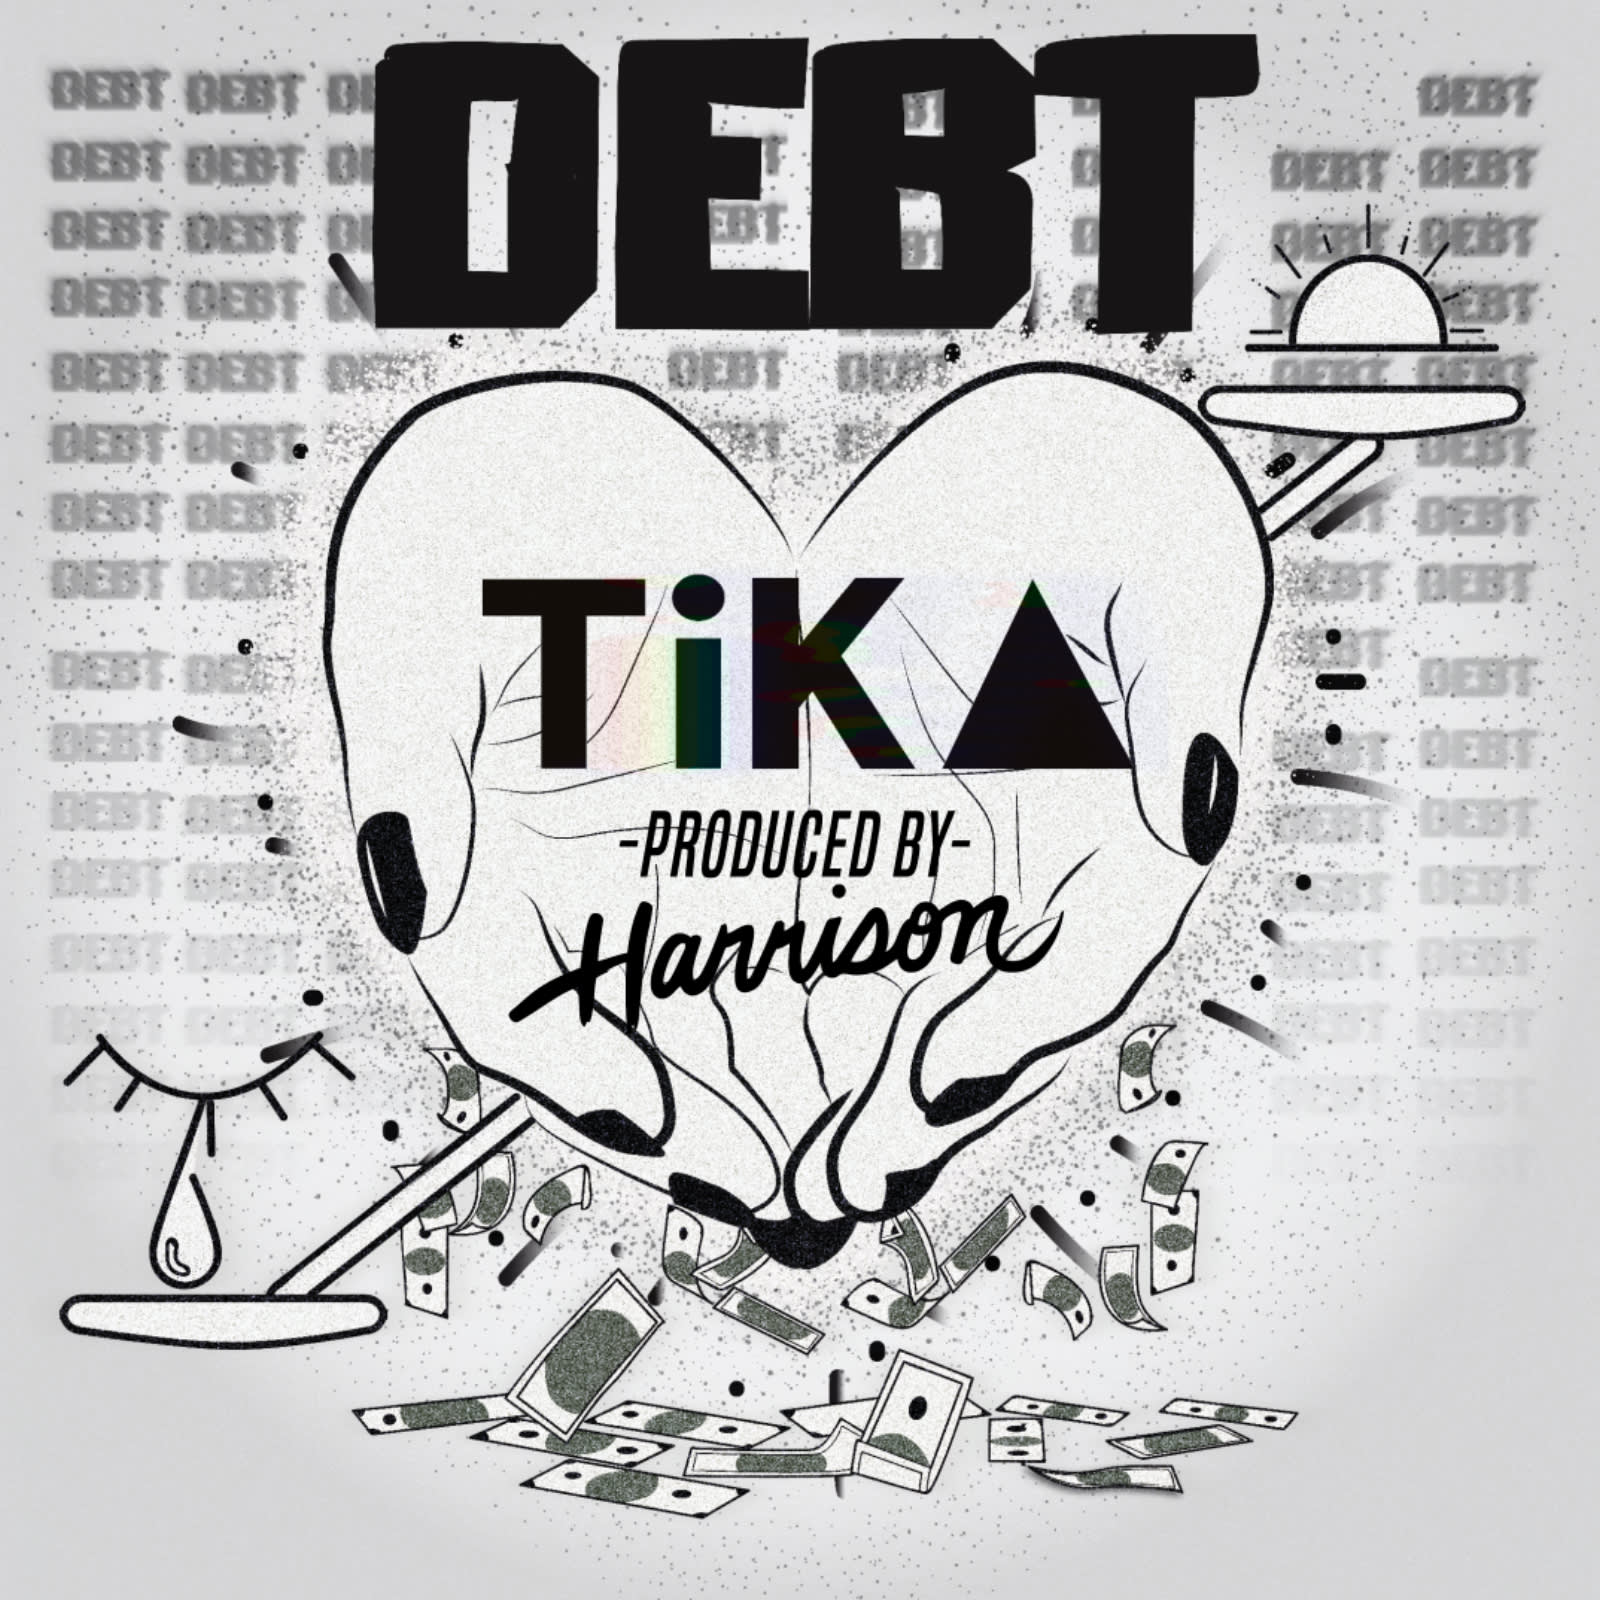 tika-harrison-debt-single-premiere-artwork